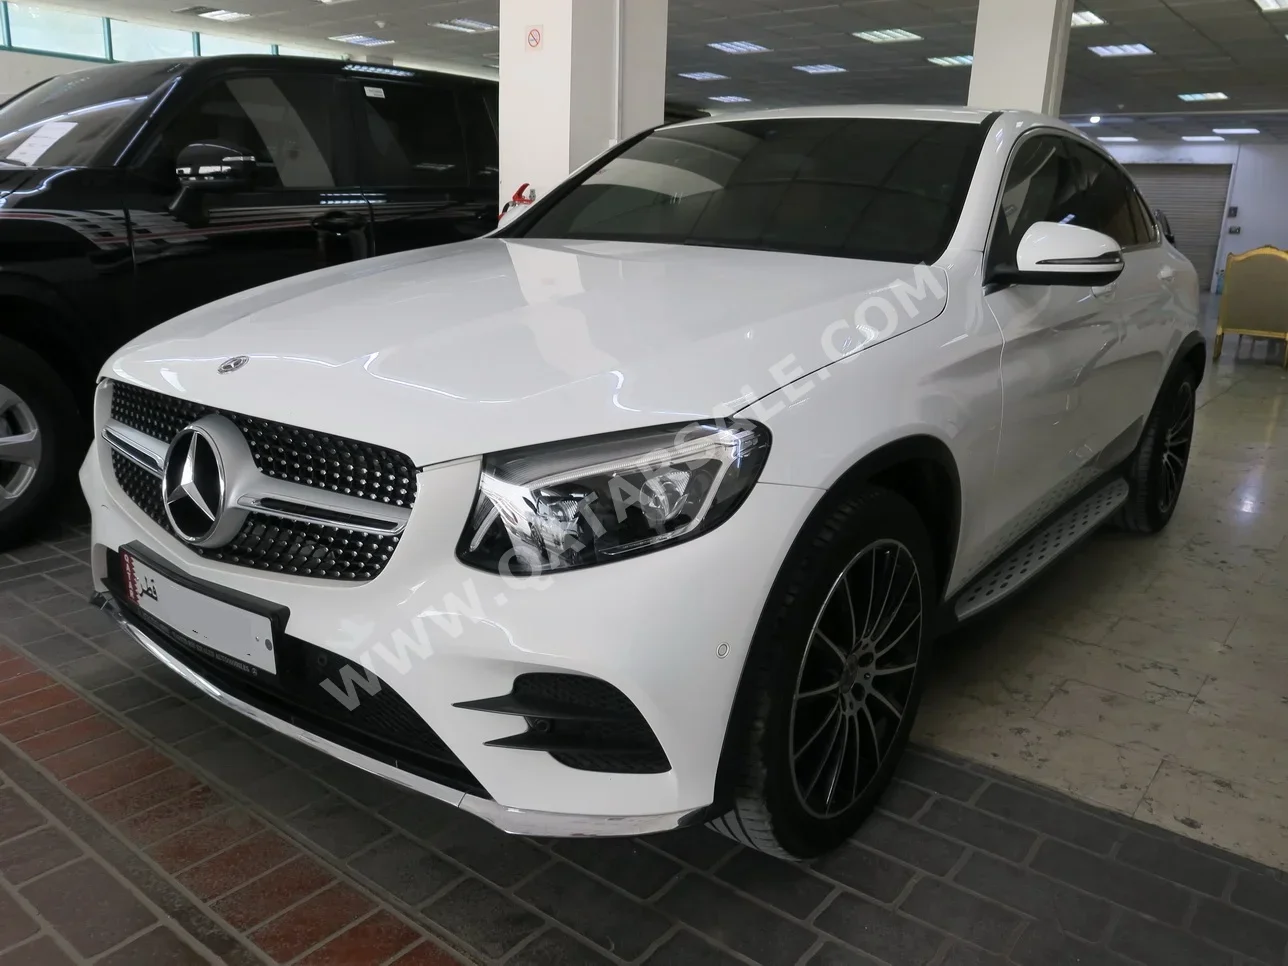 Mercedes-Benz  GLC  250  2018  Automatic  68,000 Km  4 Cylinder  All Wheel Drive (AWD)  SUV  White